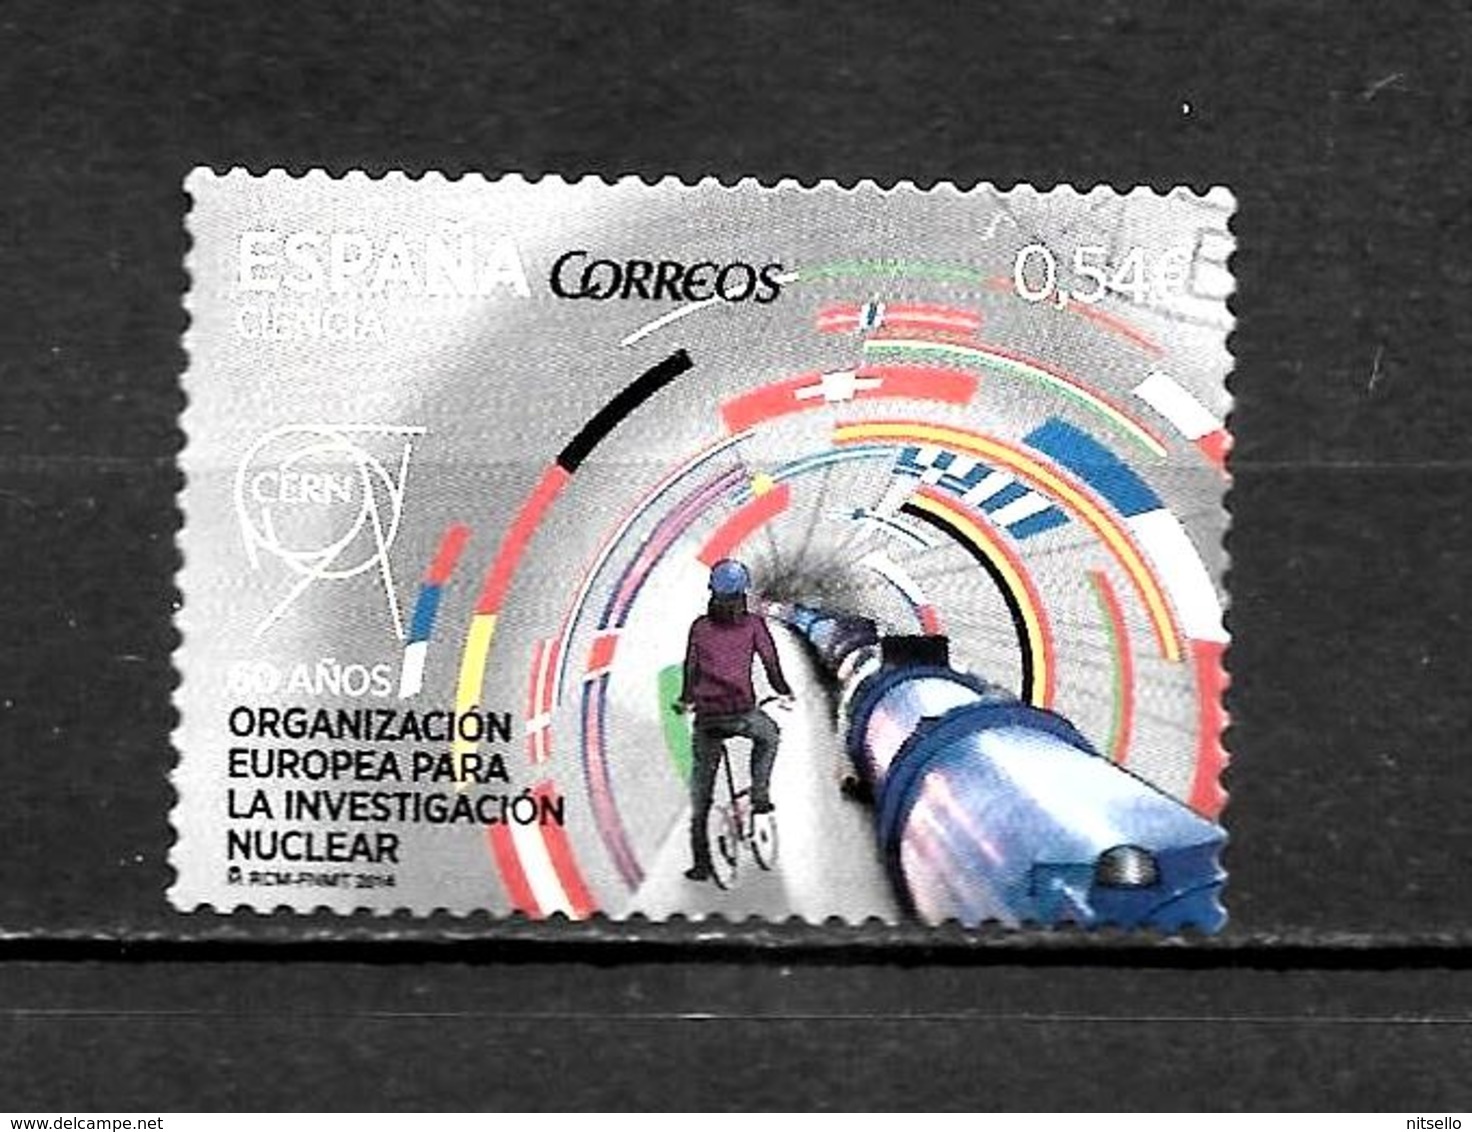 LOTE 2031 ///  ESPAÑA 2014 INVESTIGACION NUCLEAR  ¡¡¡ OFERTA - LIQUIDATION !!! JE LIQUIDE !!! - Used Stamps